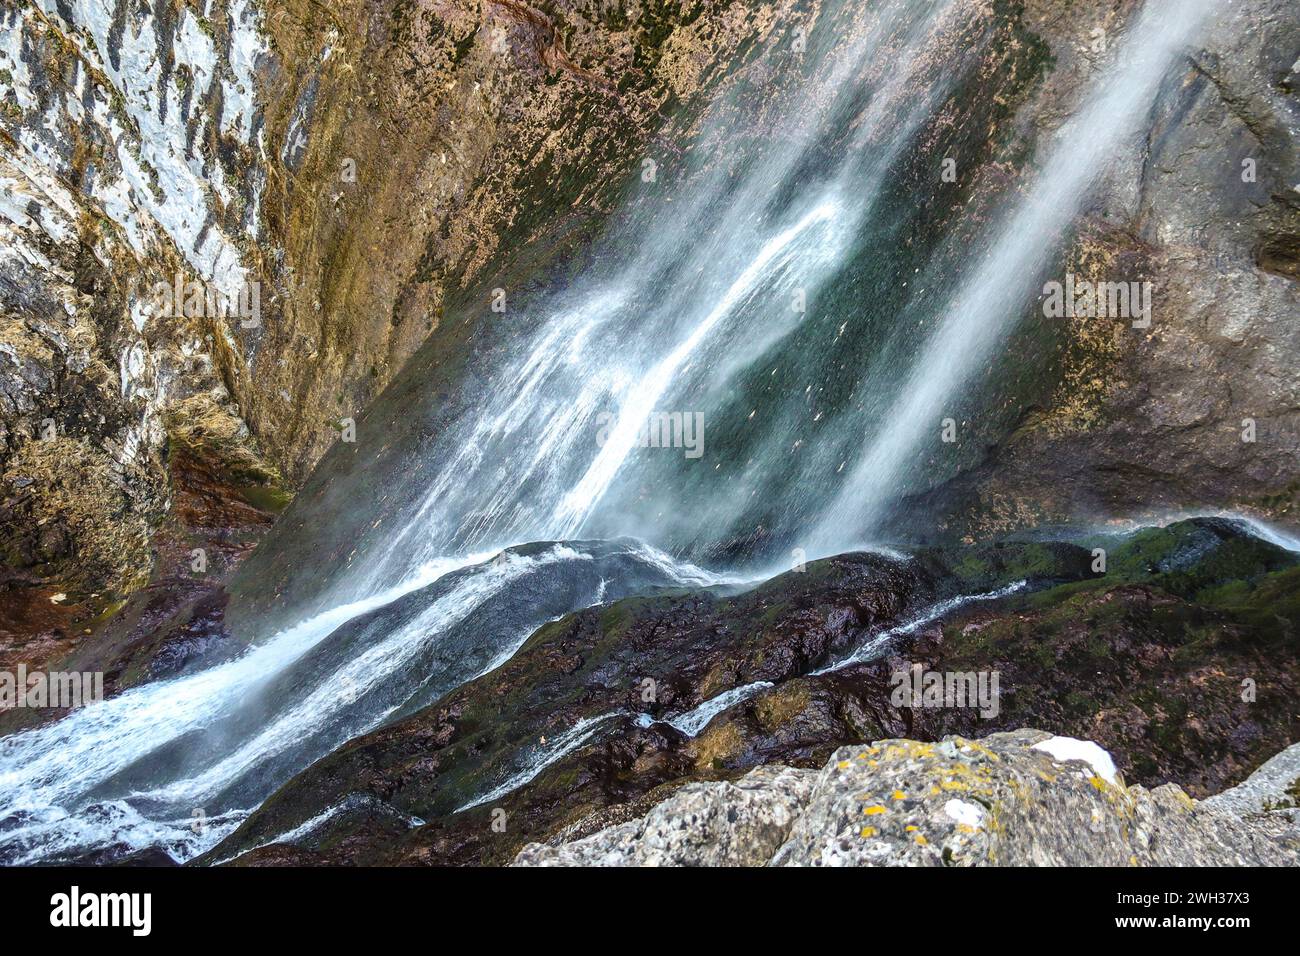 Waterfall with colorful rock wall in Nacimiento del Rio Mundo in Sierra de Alcaraz, Albacete province, Spain Stock Photo